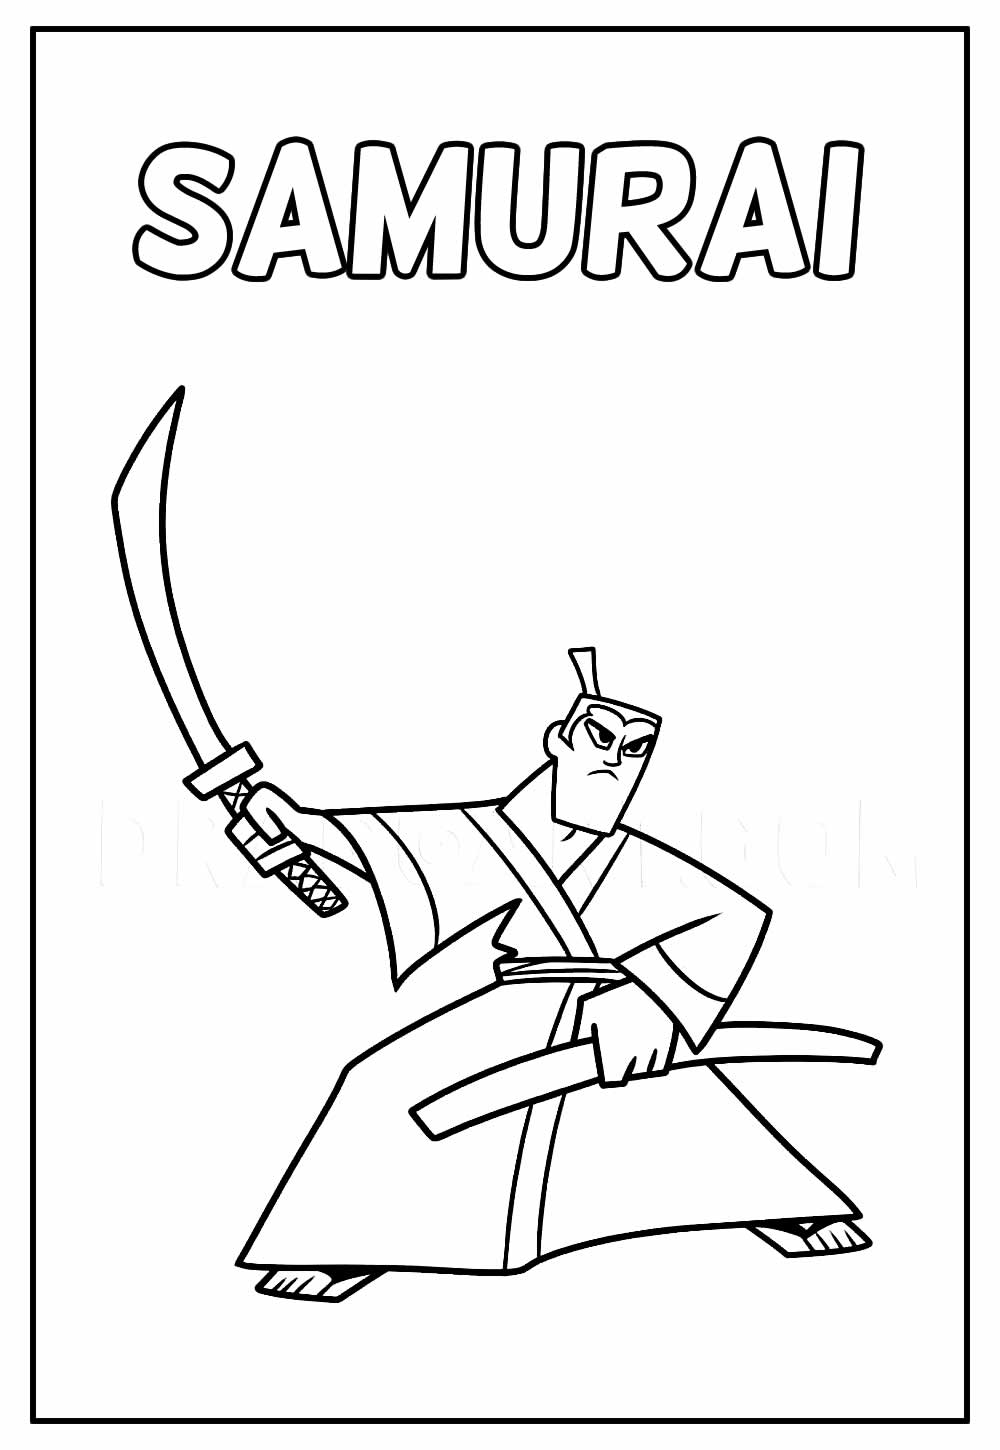 Desenho Educativo de Samurai